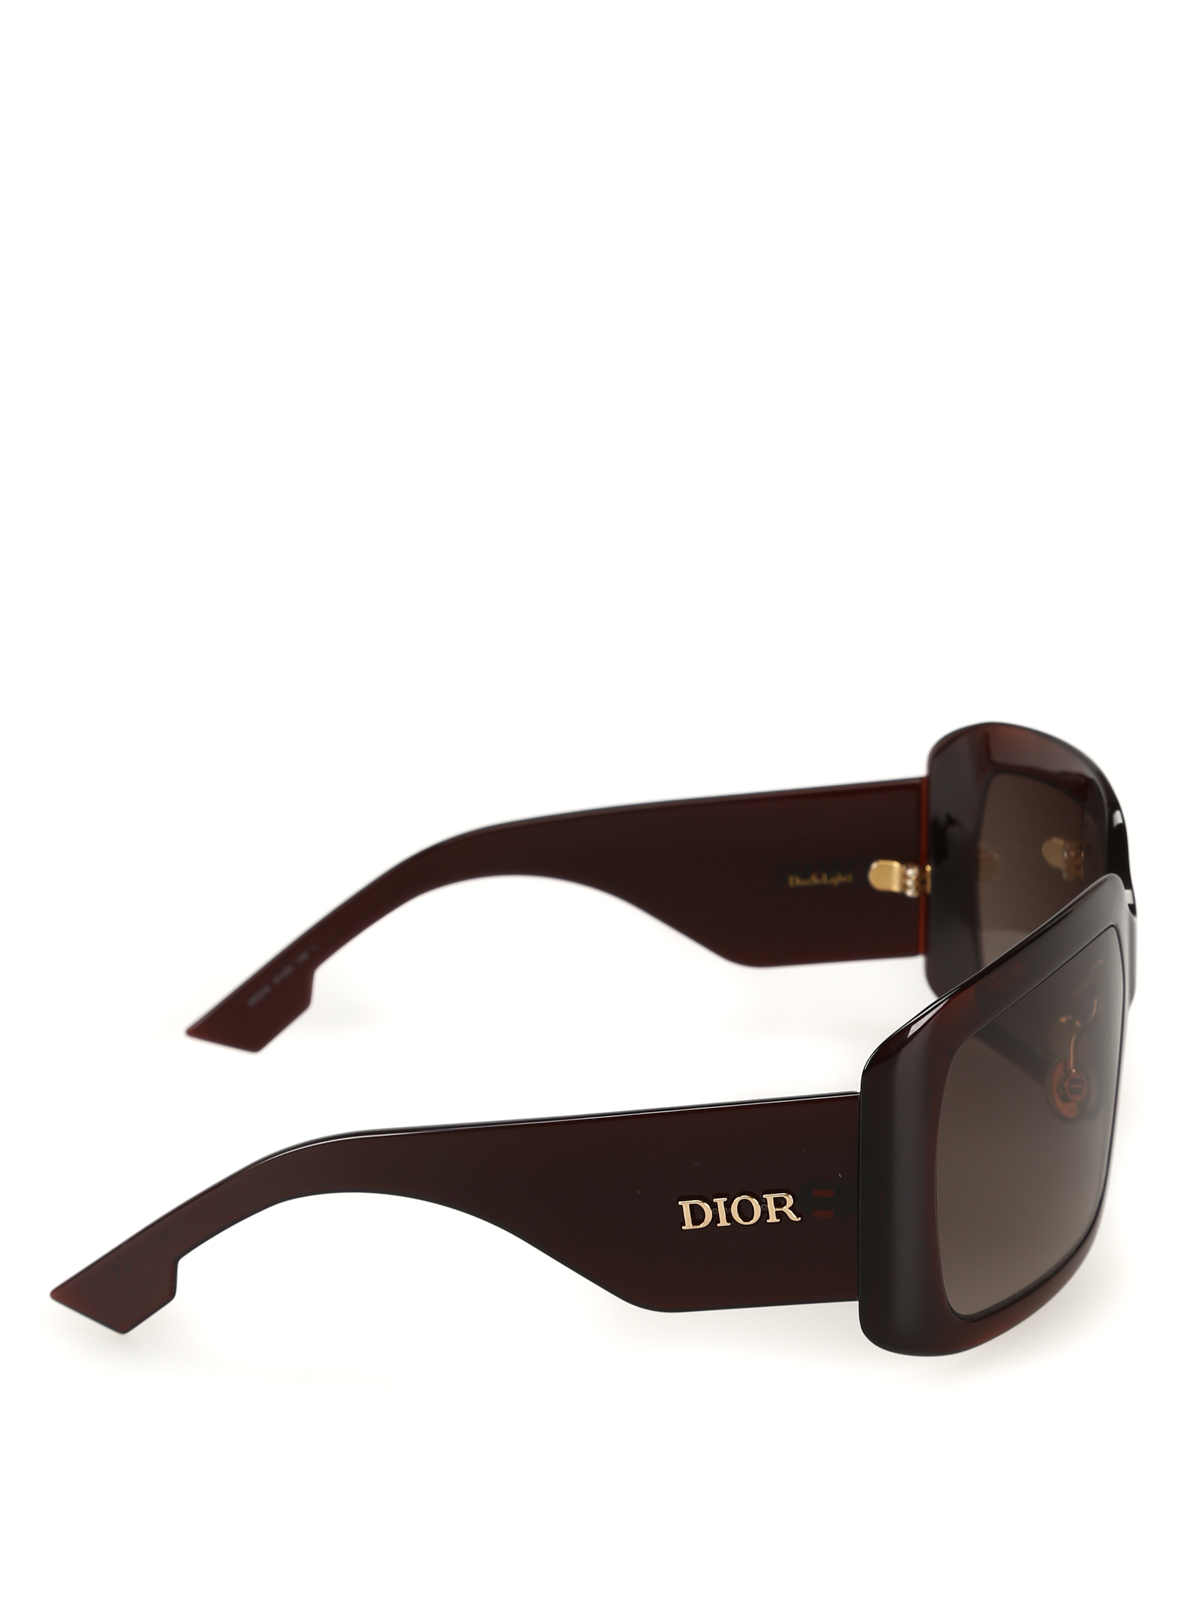 diorsolight2 sunglasses